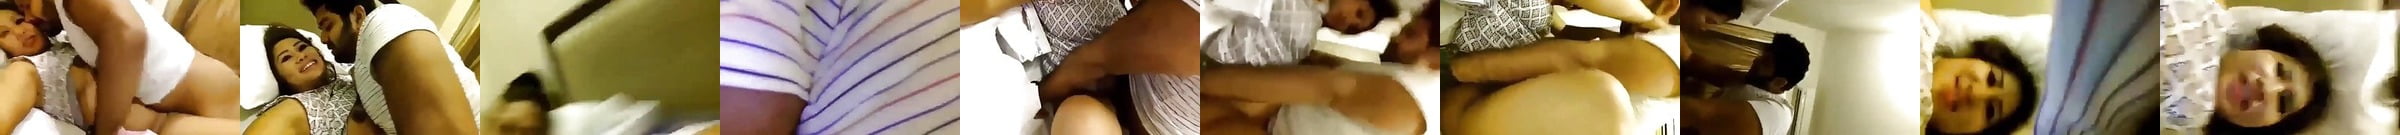 Sri Lankan Couples Hotel Sex Free Xxx Sex Tube Porn Video